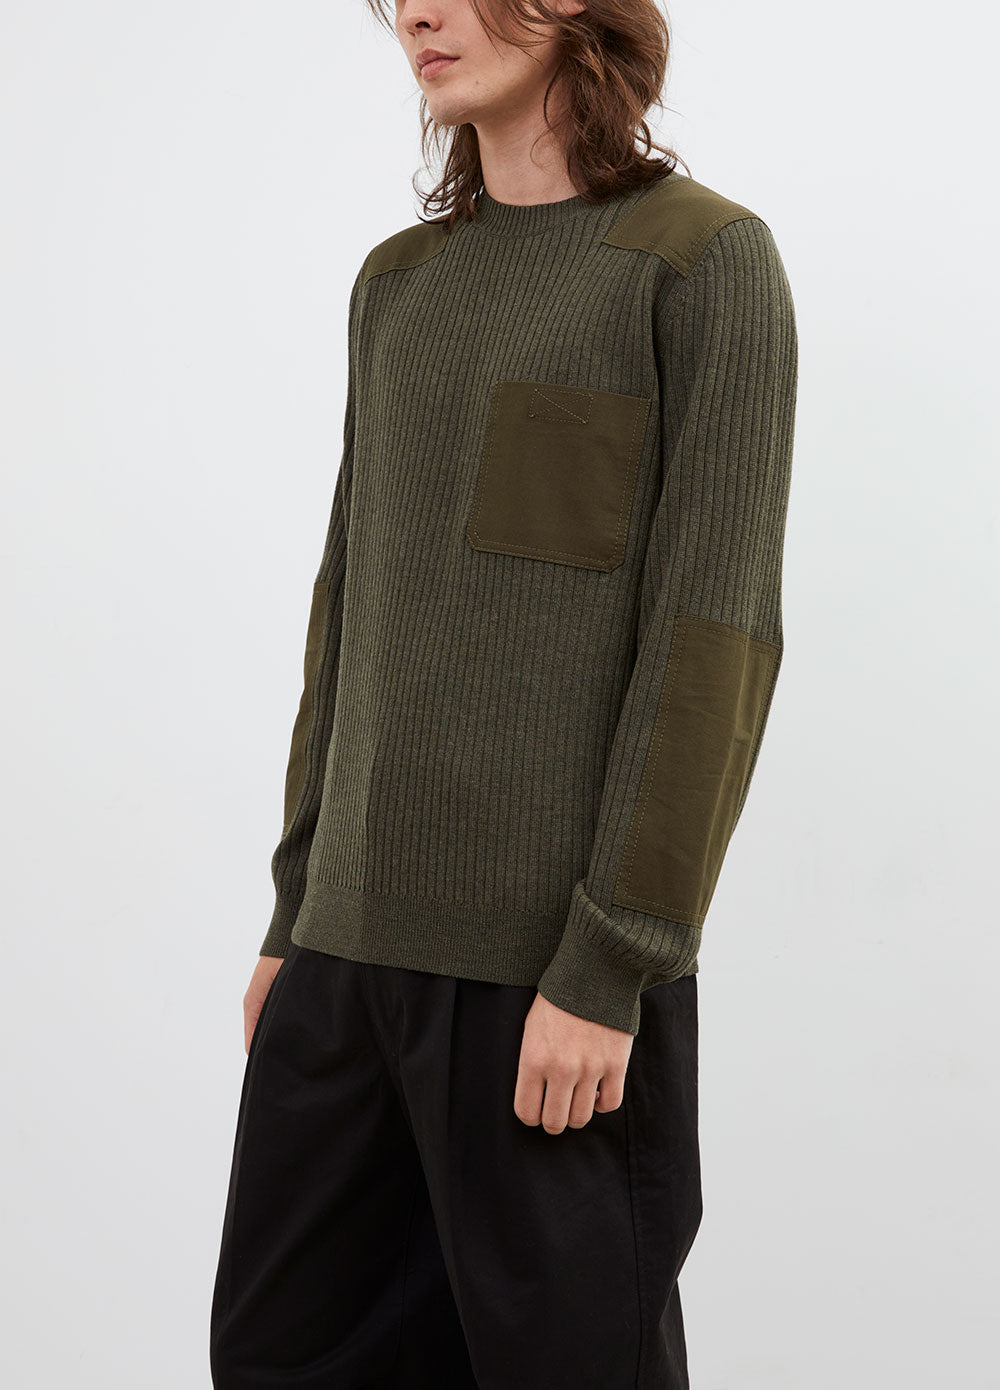 Romain Knit Sweatshirt